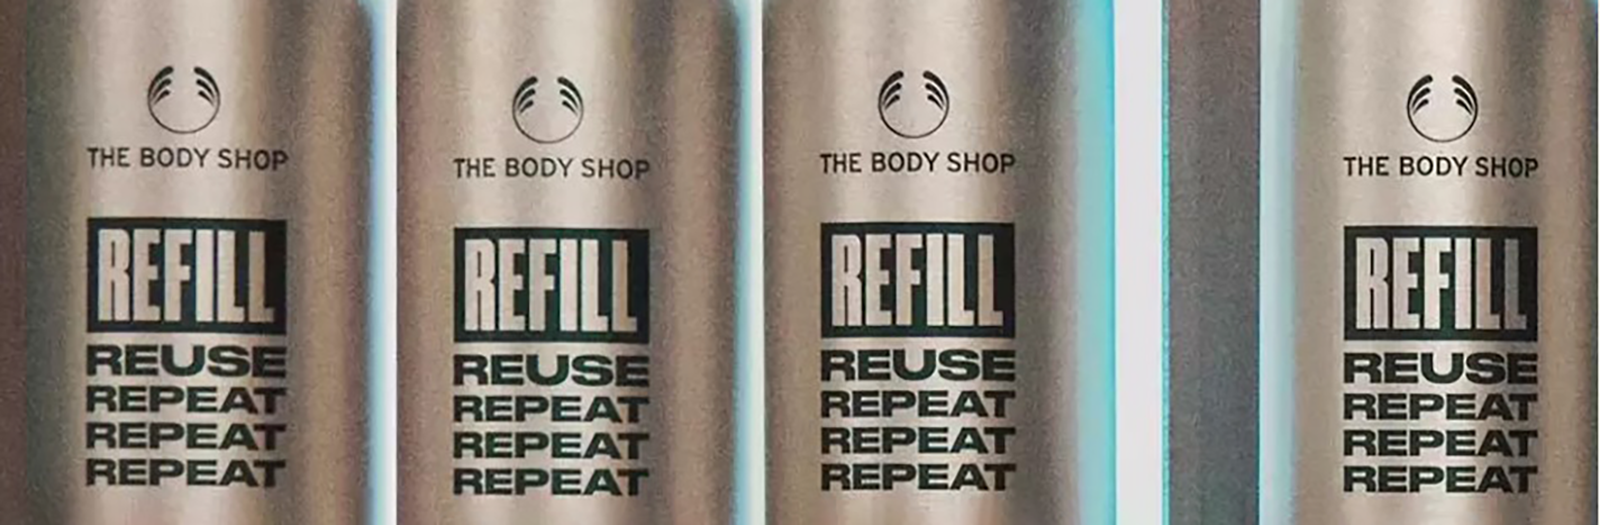 The Body Shop refill bottles